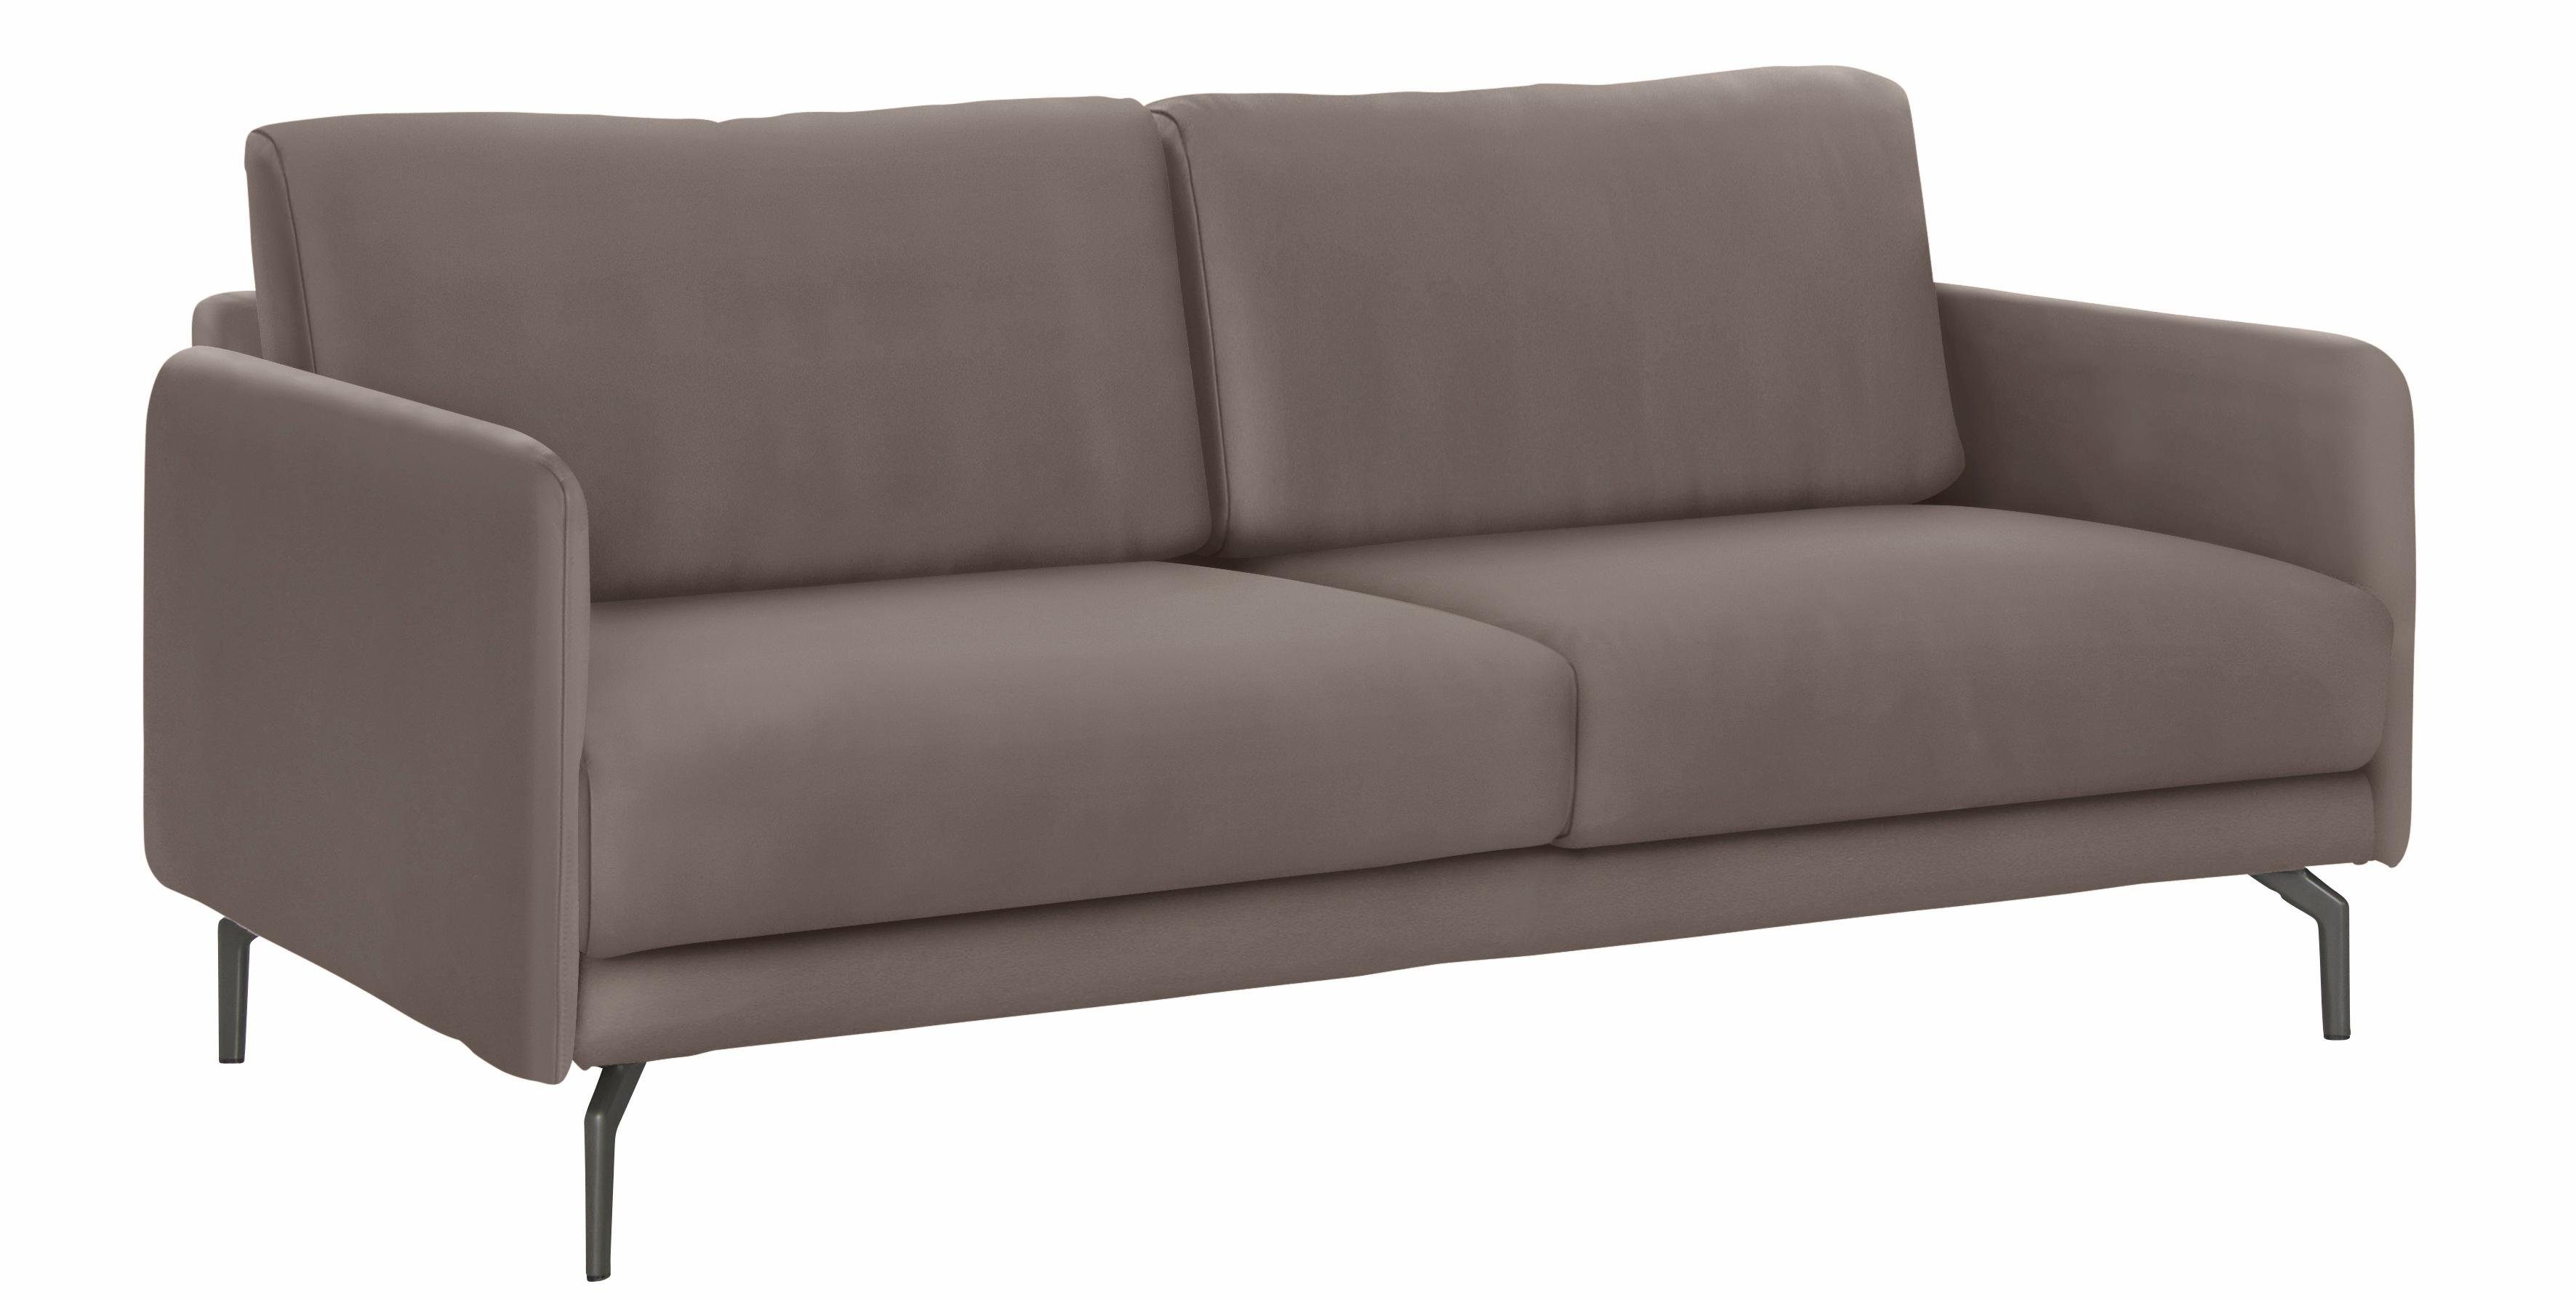 Breite Alugussfüße 150 hülsta 2-Sitzer Armlehne cm schmal, hs.450, in umbragrau, sehr sofa